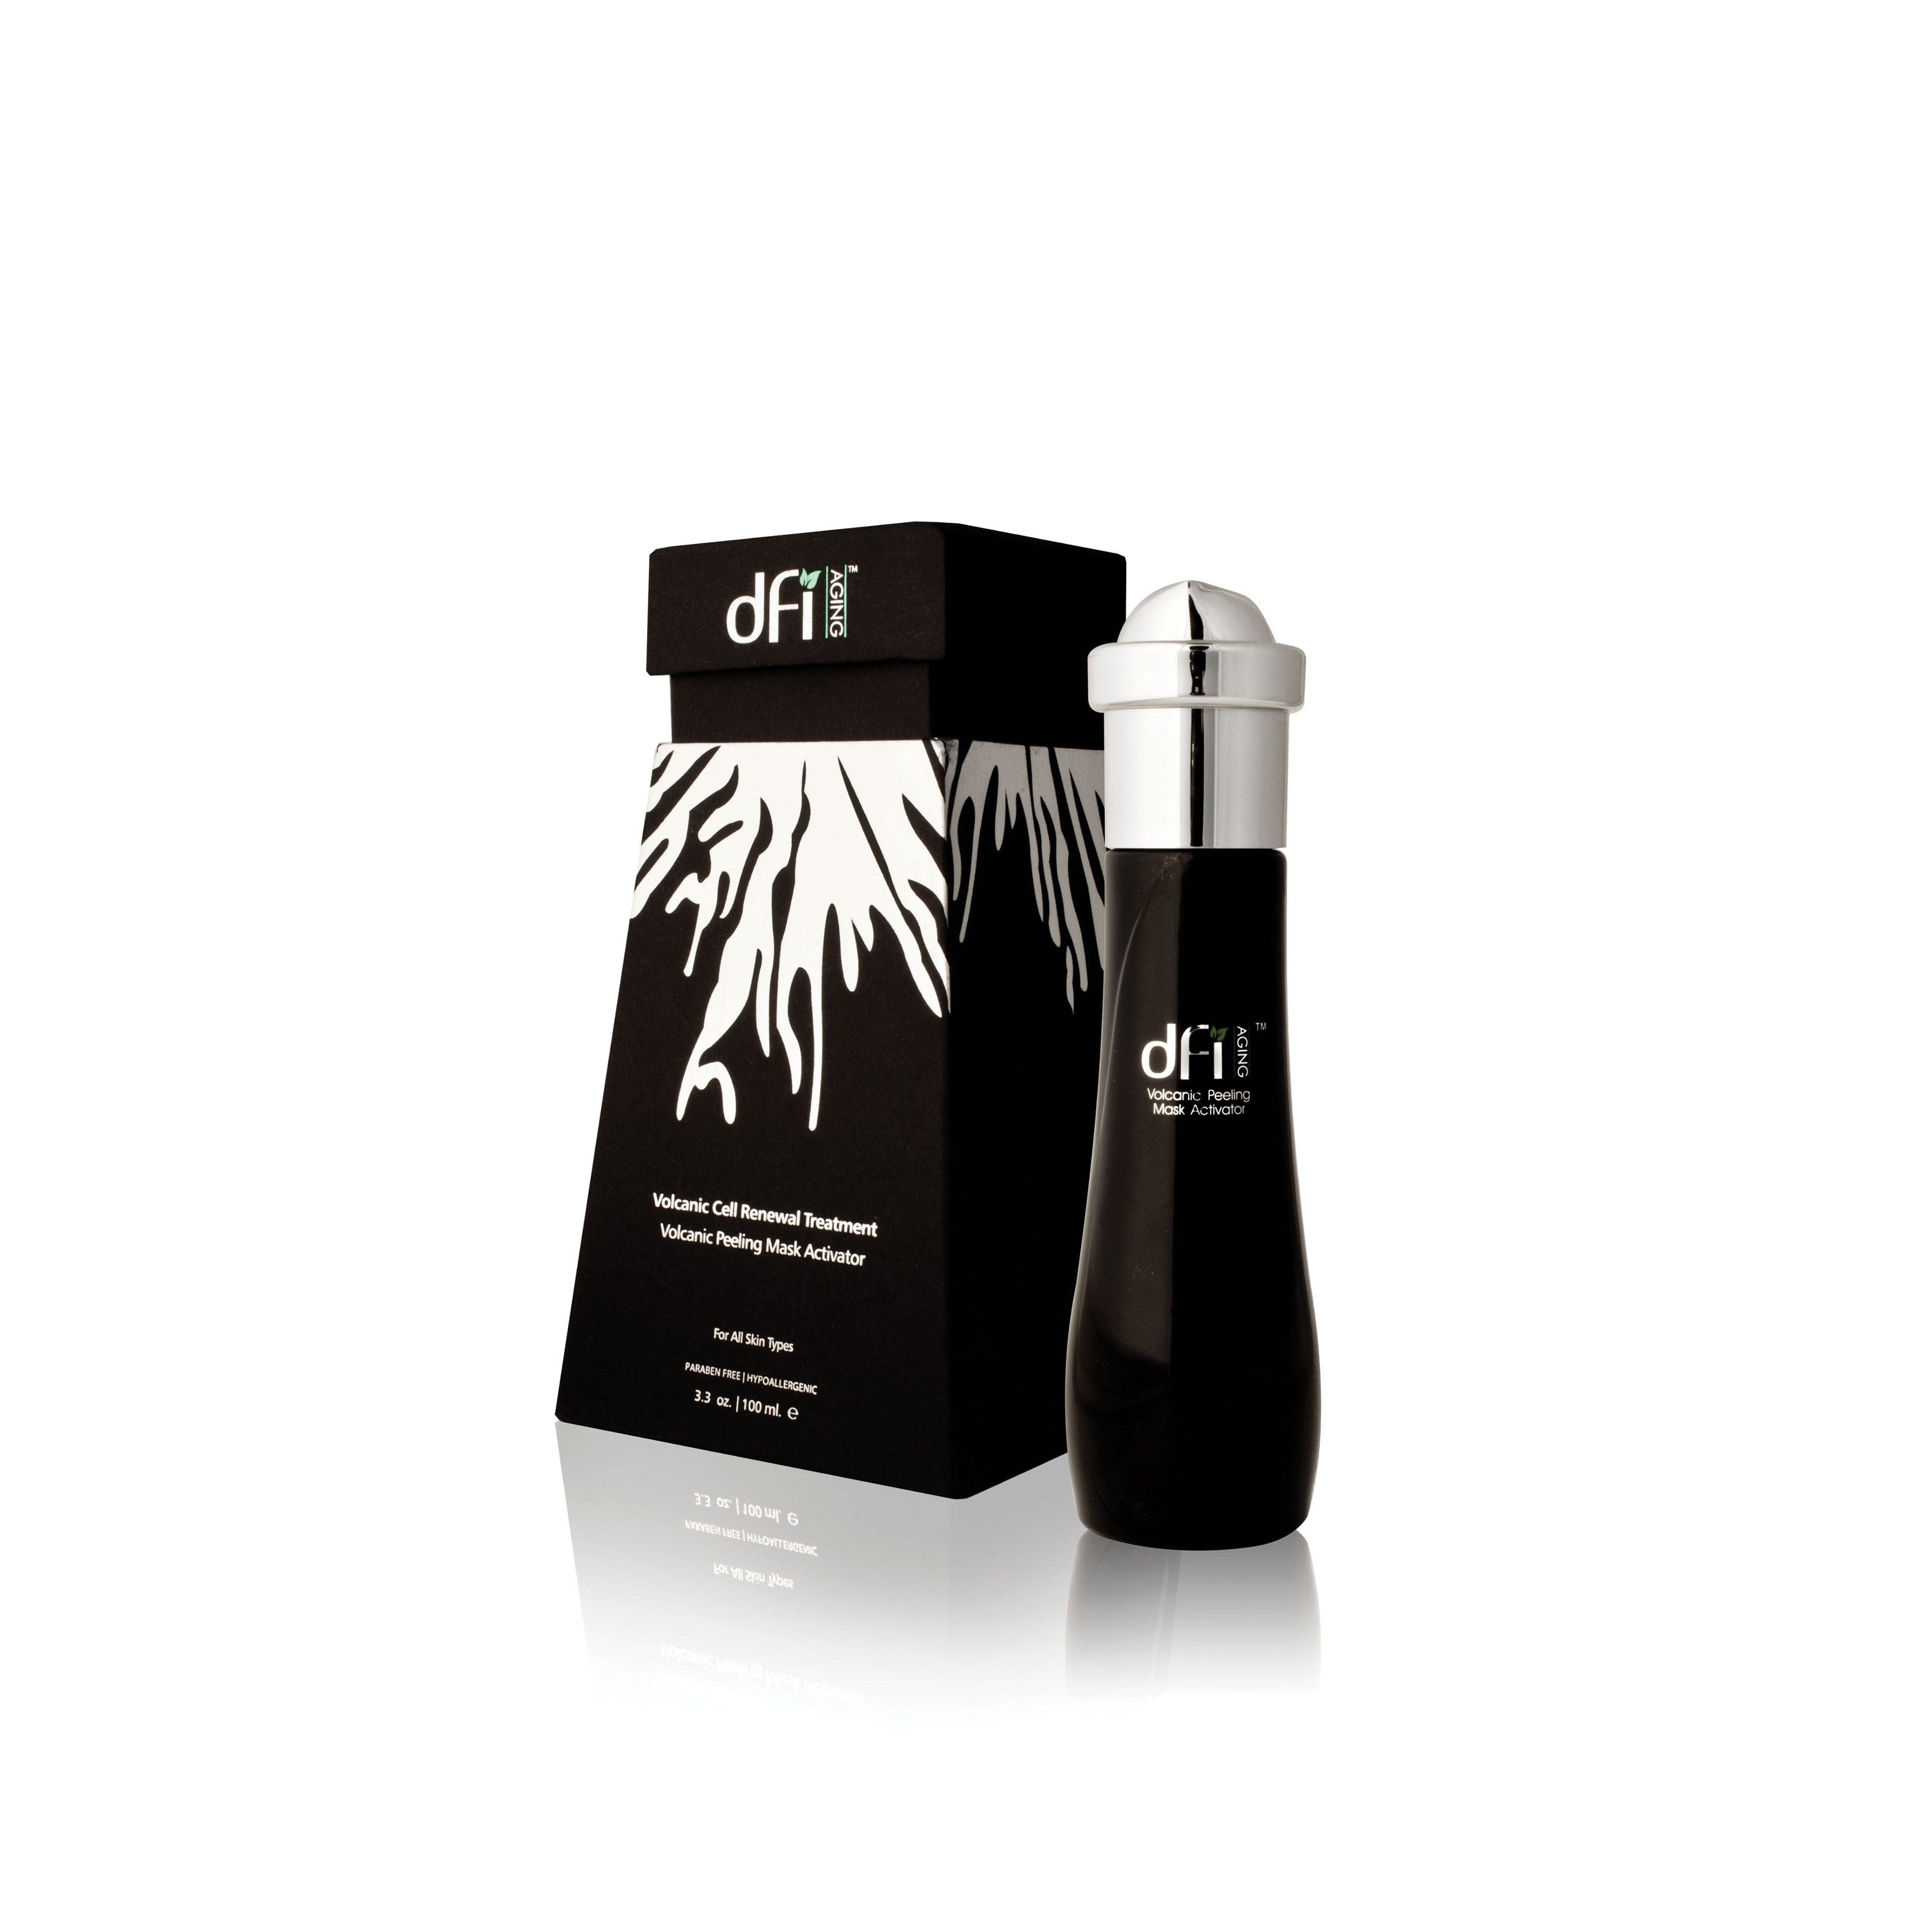 Product Branding and Packaging Design for dfi Aging Skincare's Volcanic Peeling Mask.